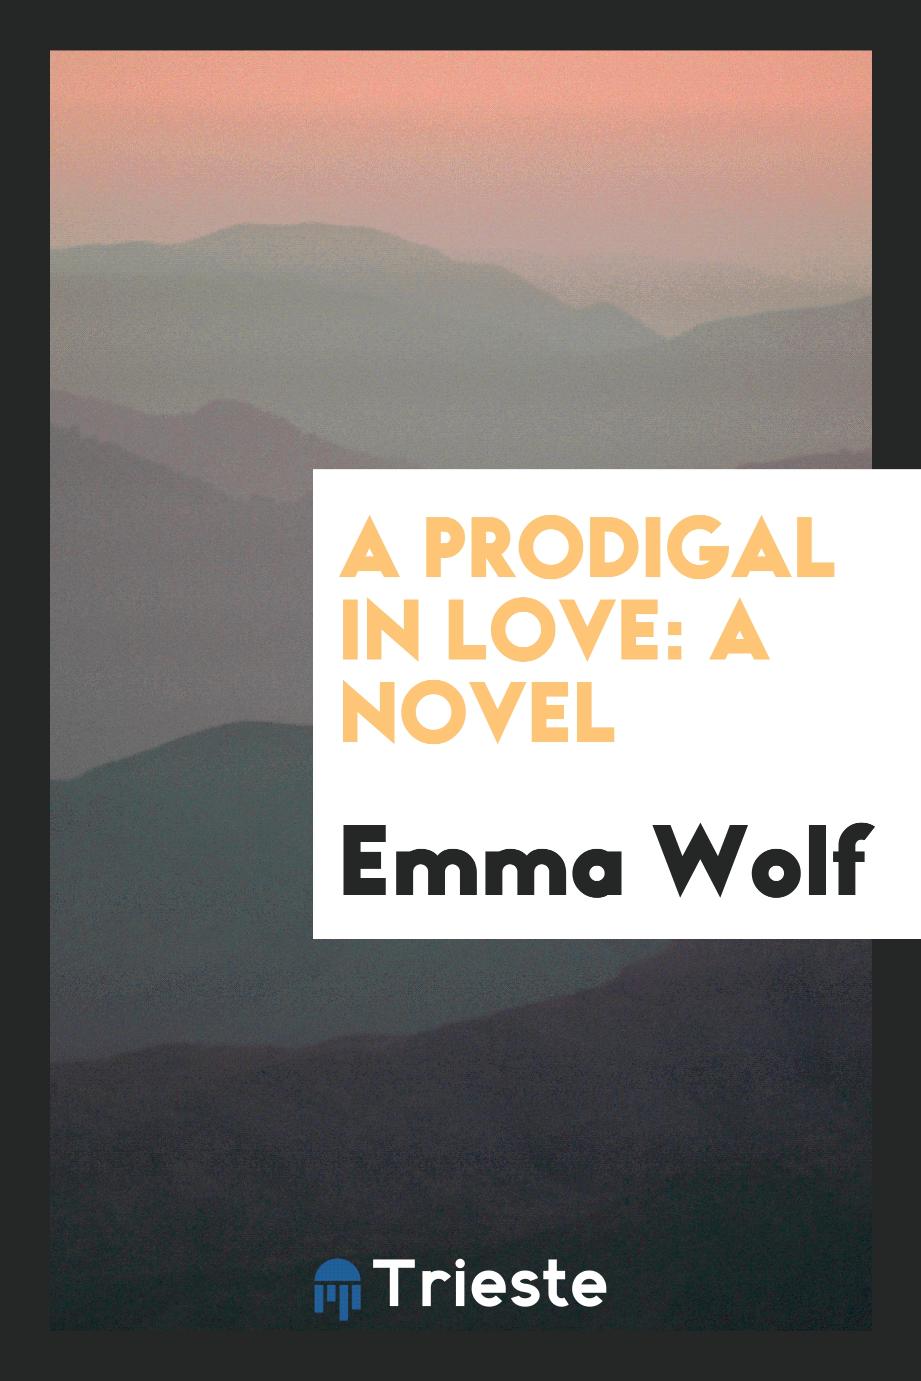 A prodigal in love: a novel